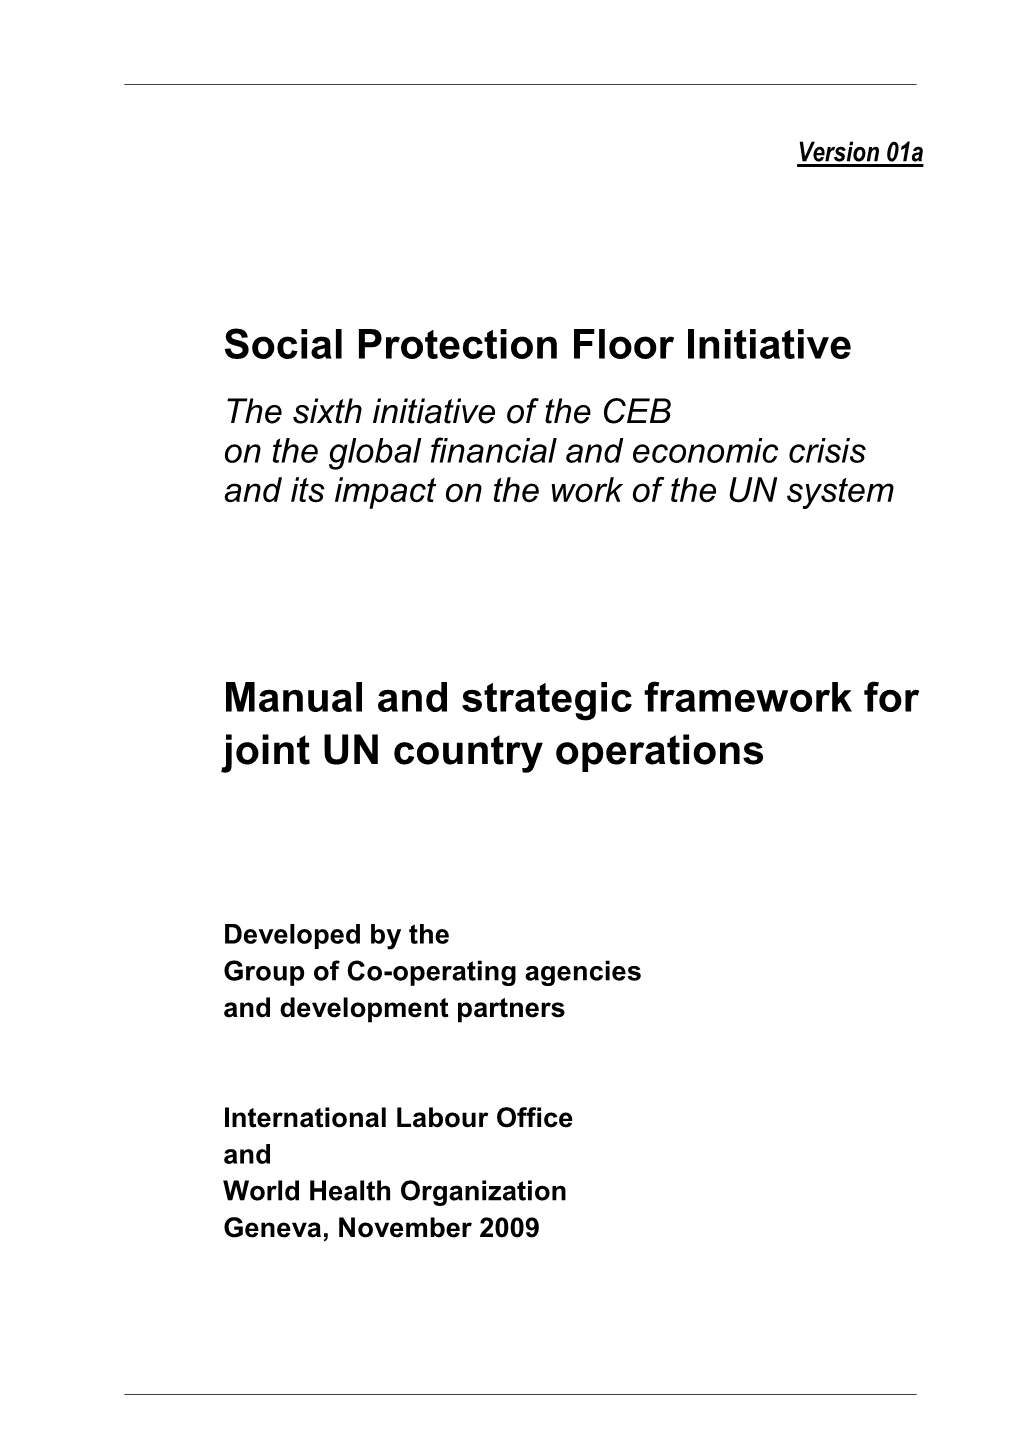 Social Protection Floor Initiative: Manual and Strategic Framework